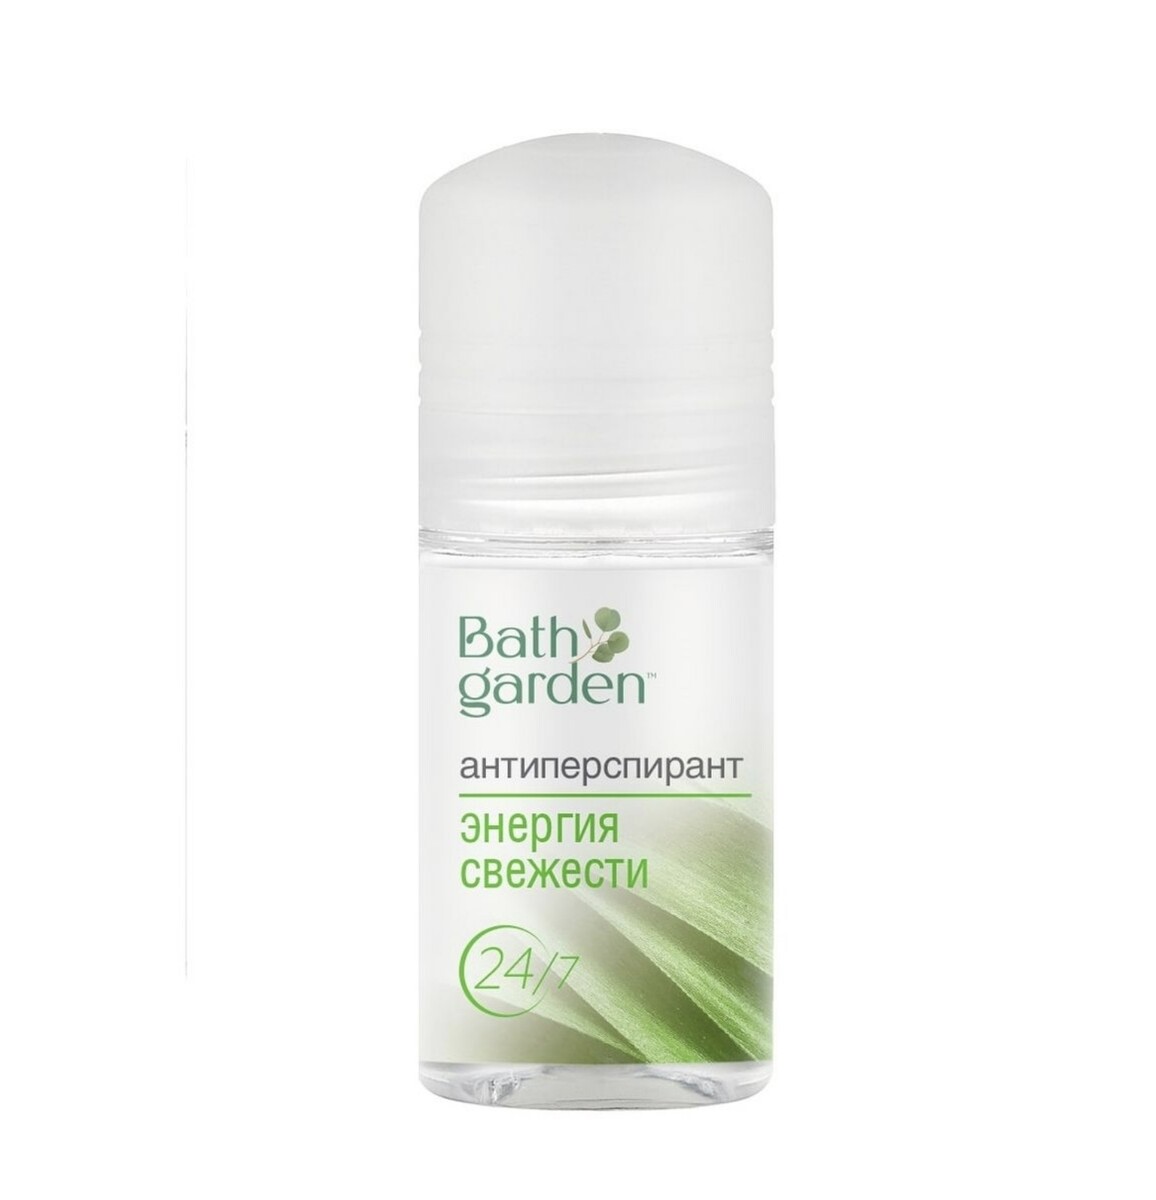 Bath garden дезодорант-антиперспирант энергия свежести, 50мл